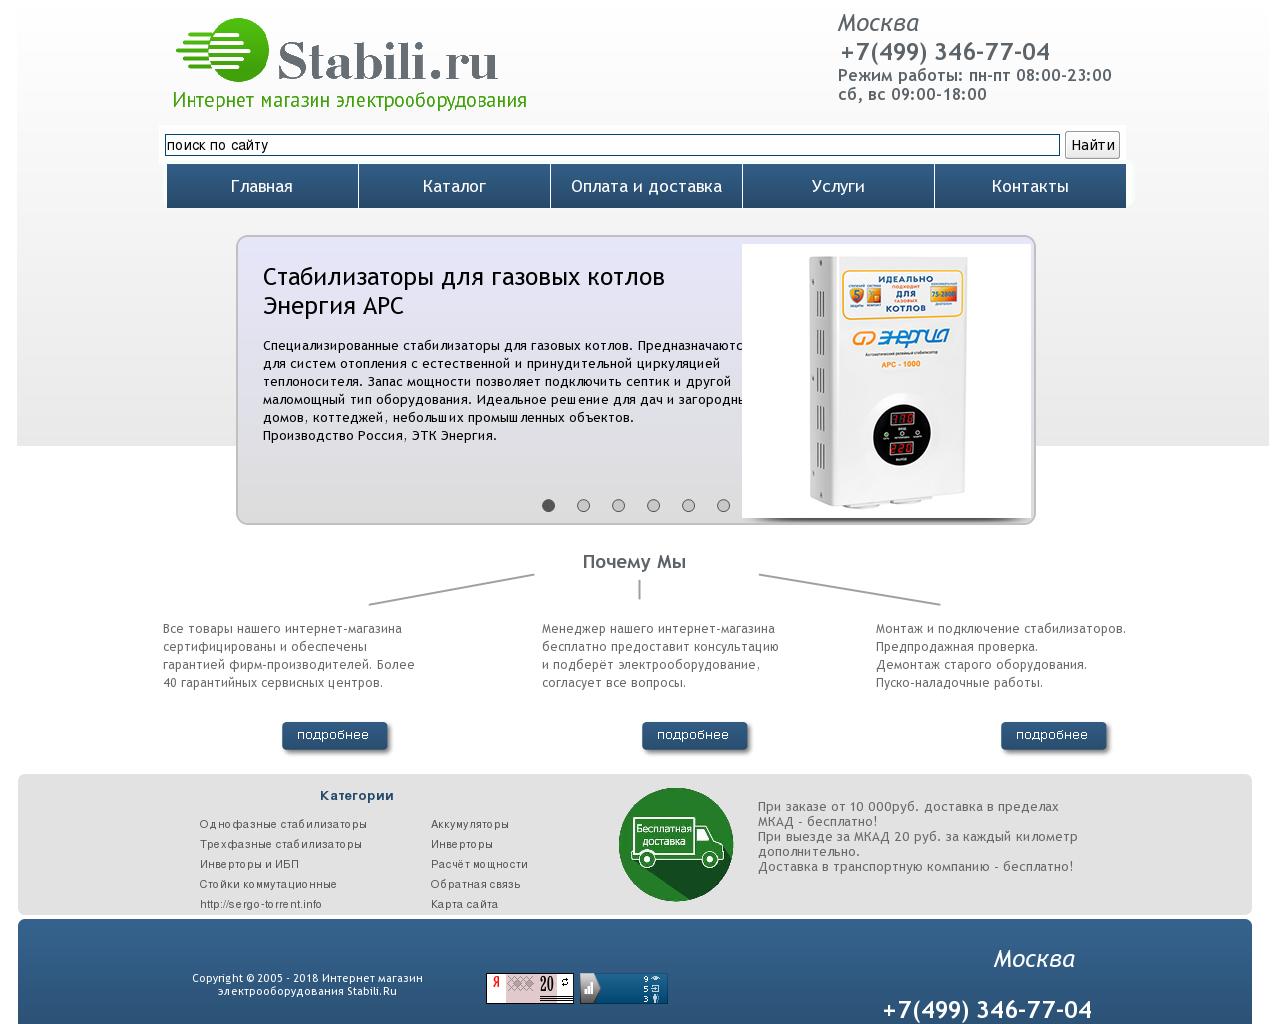 Изображение сайта stabili.ru в разрешении 1280x1024